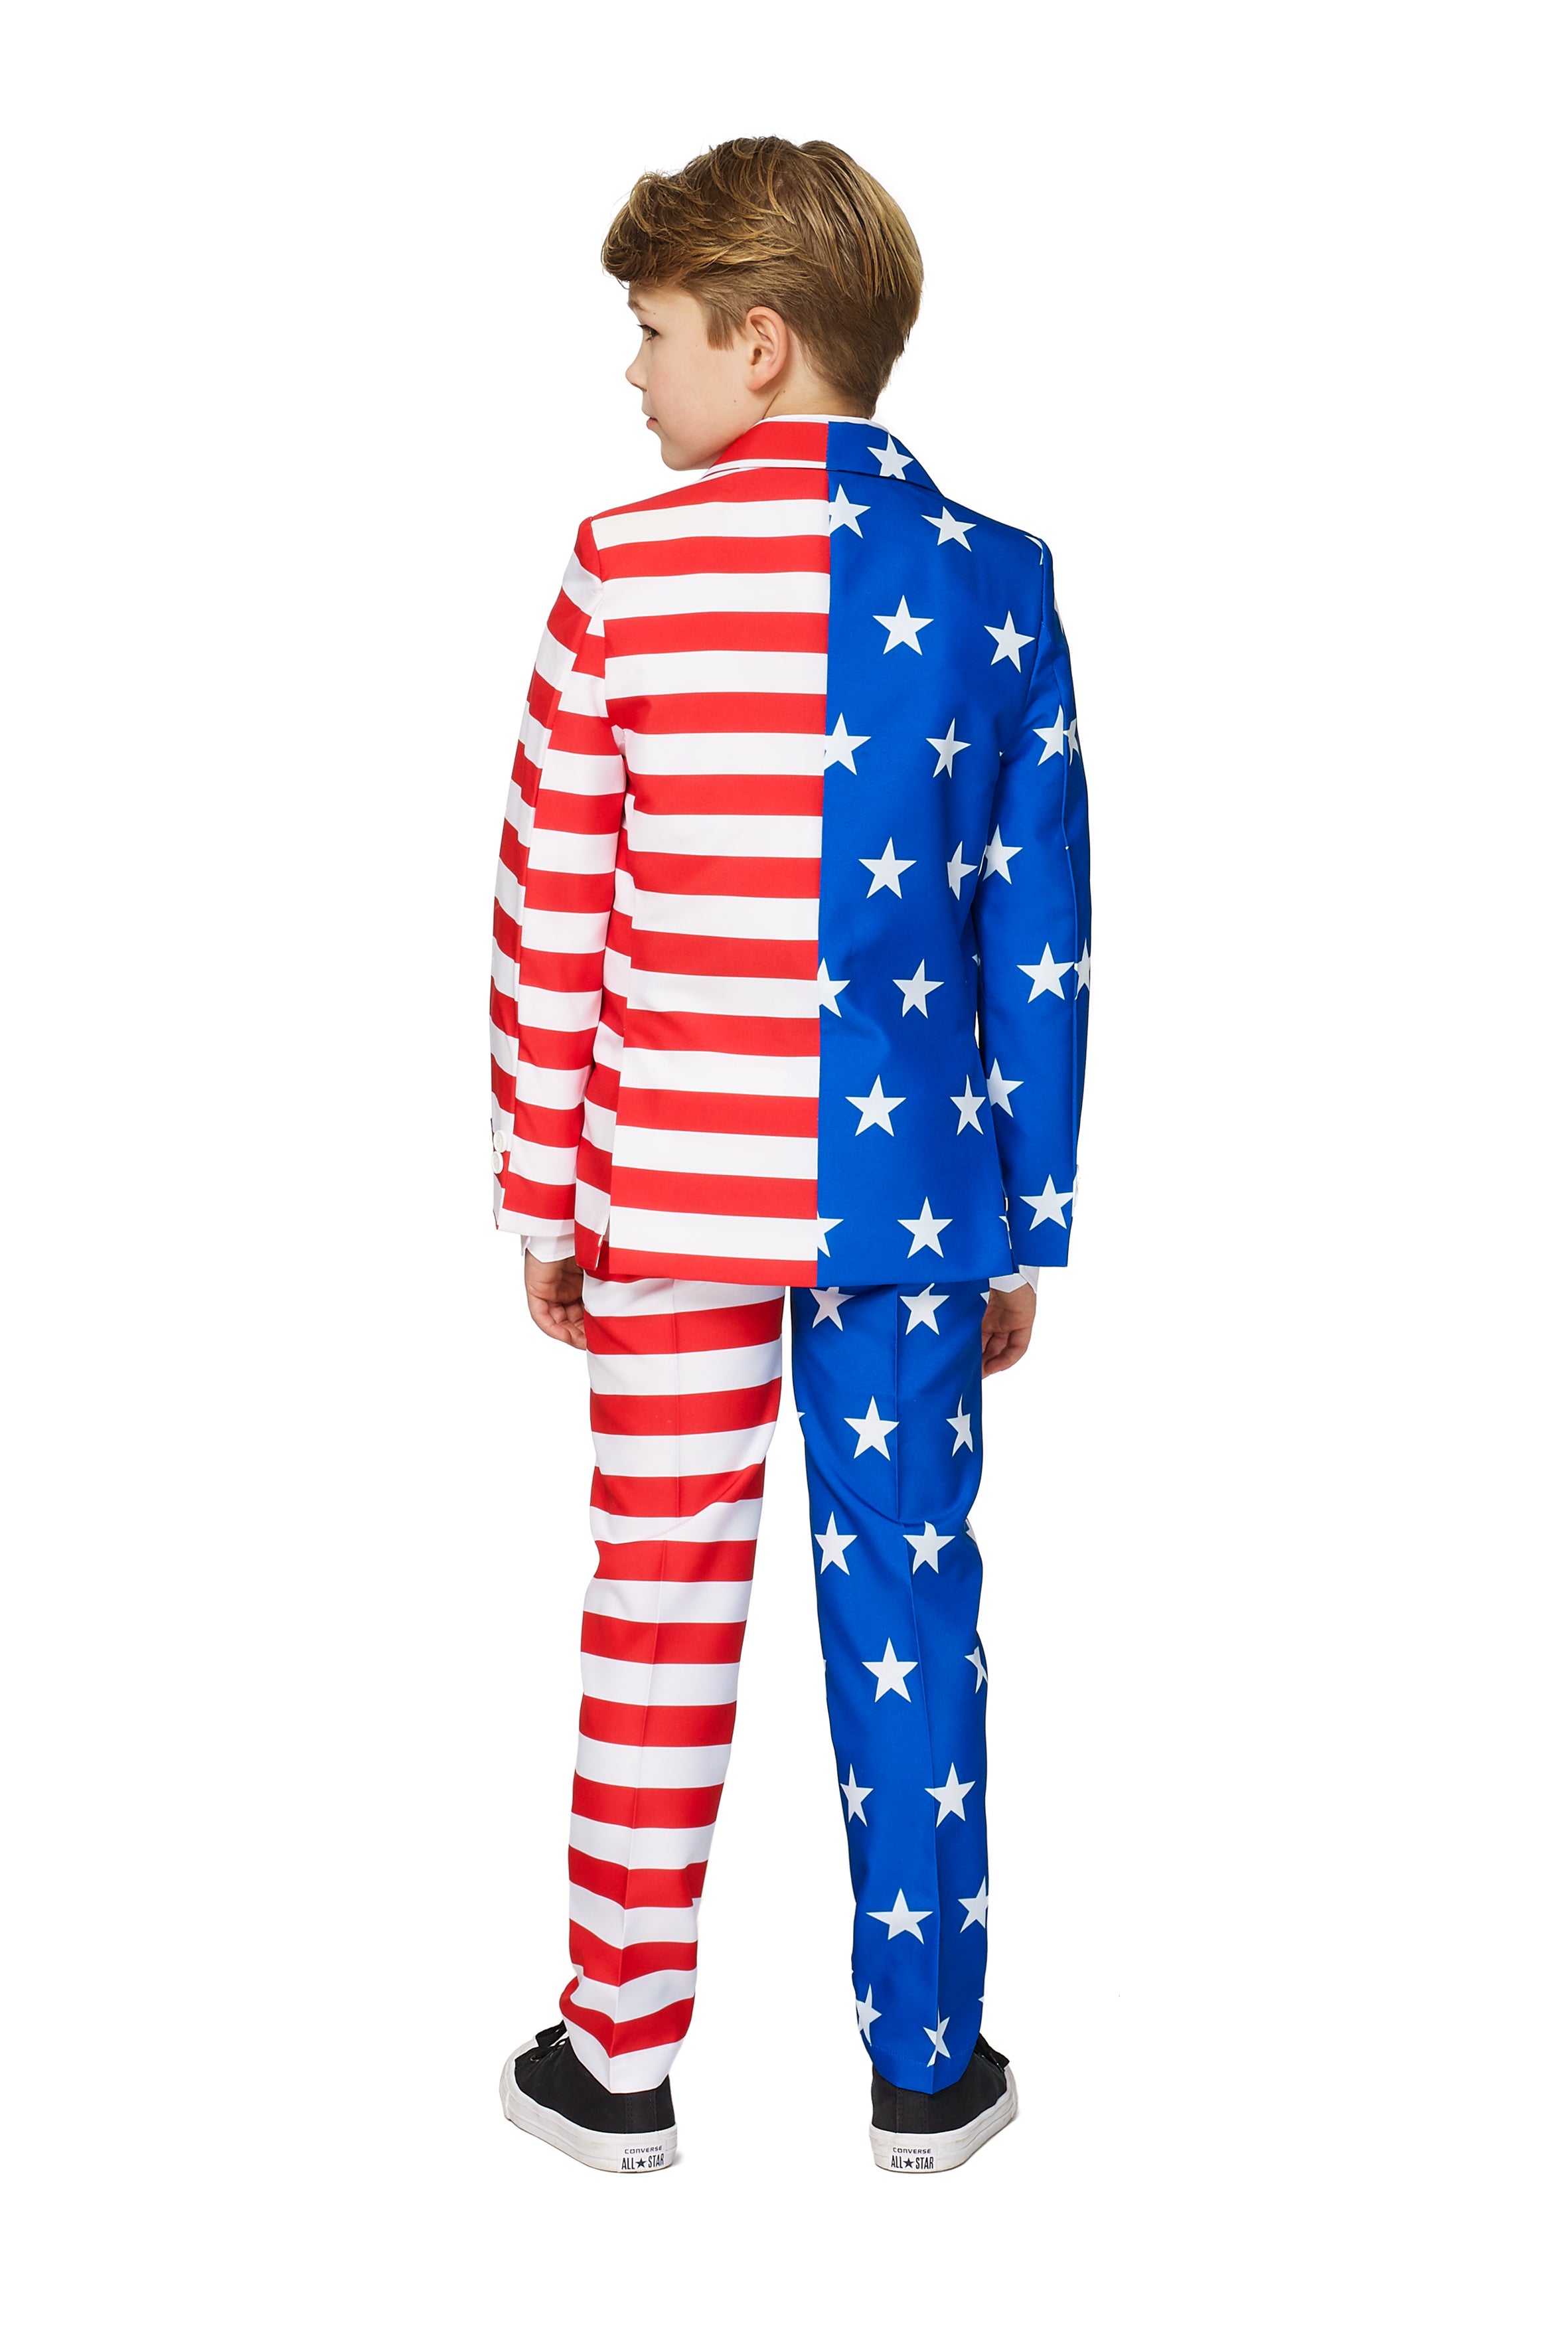 Costume Suitmeister BOYS USA Flag